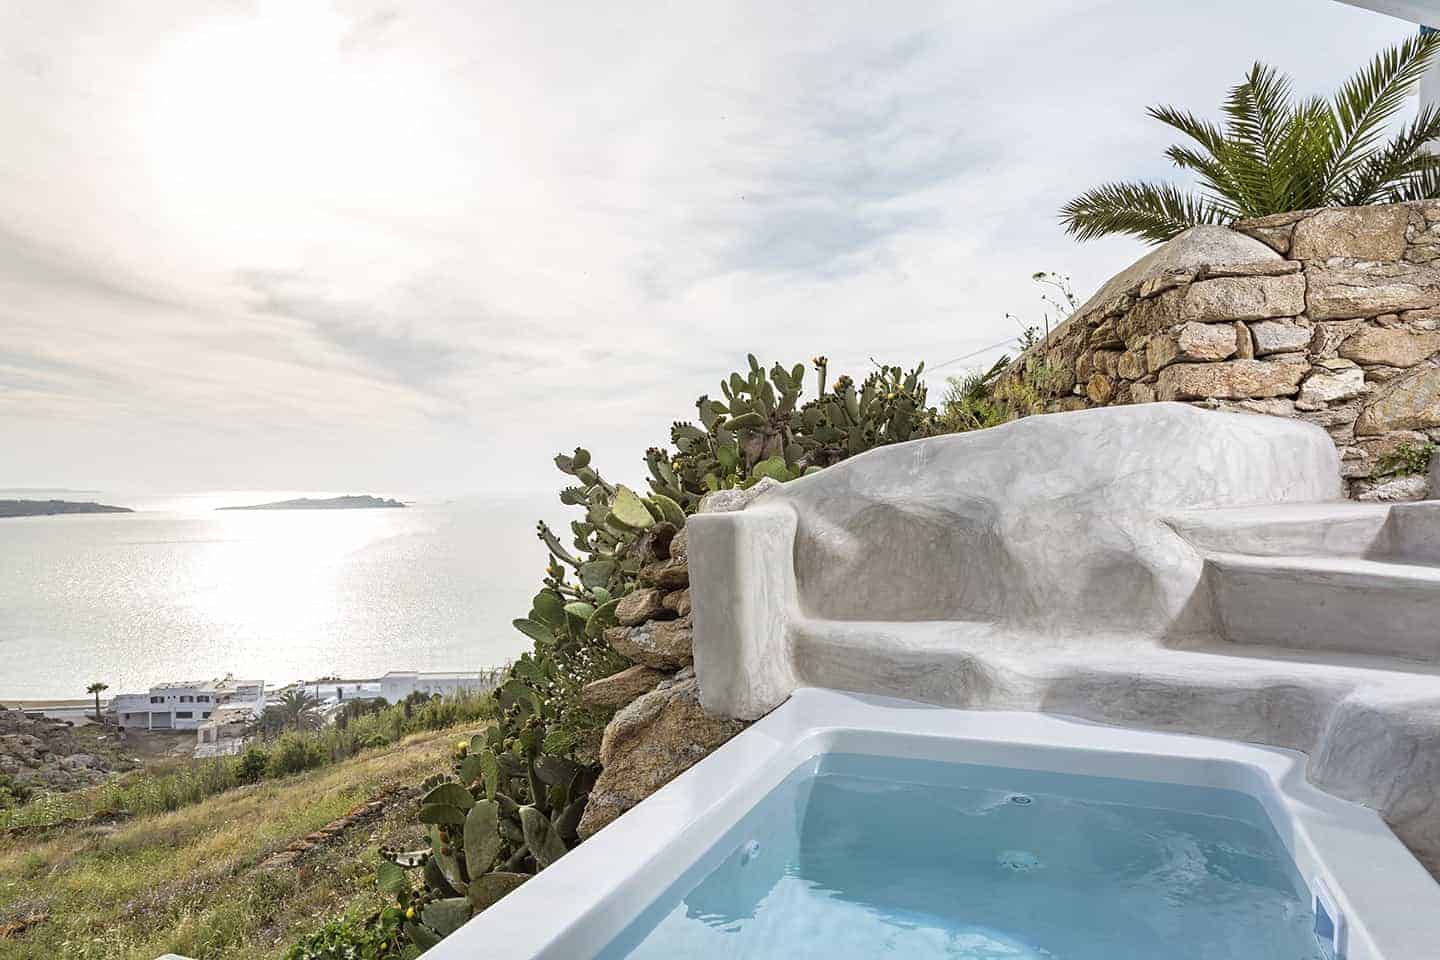 Boheme Mykonos luxury suite cliffside pool overlooking the Aegean Sea